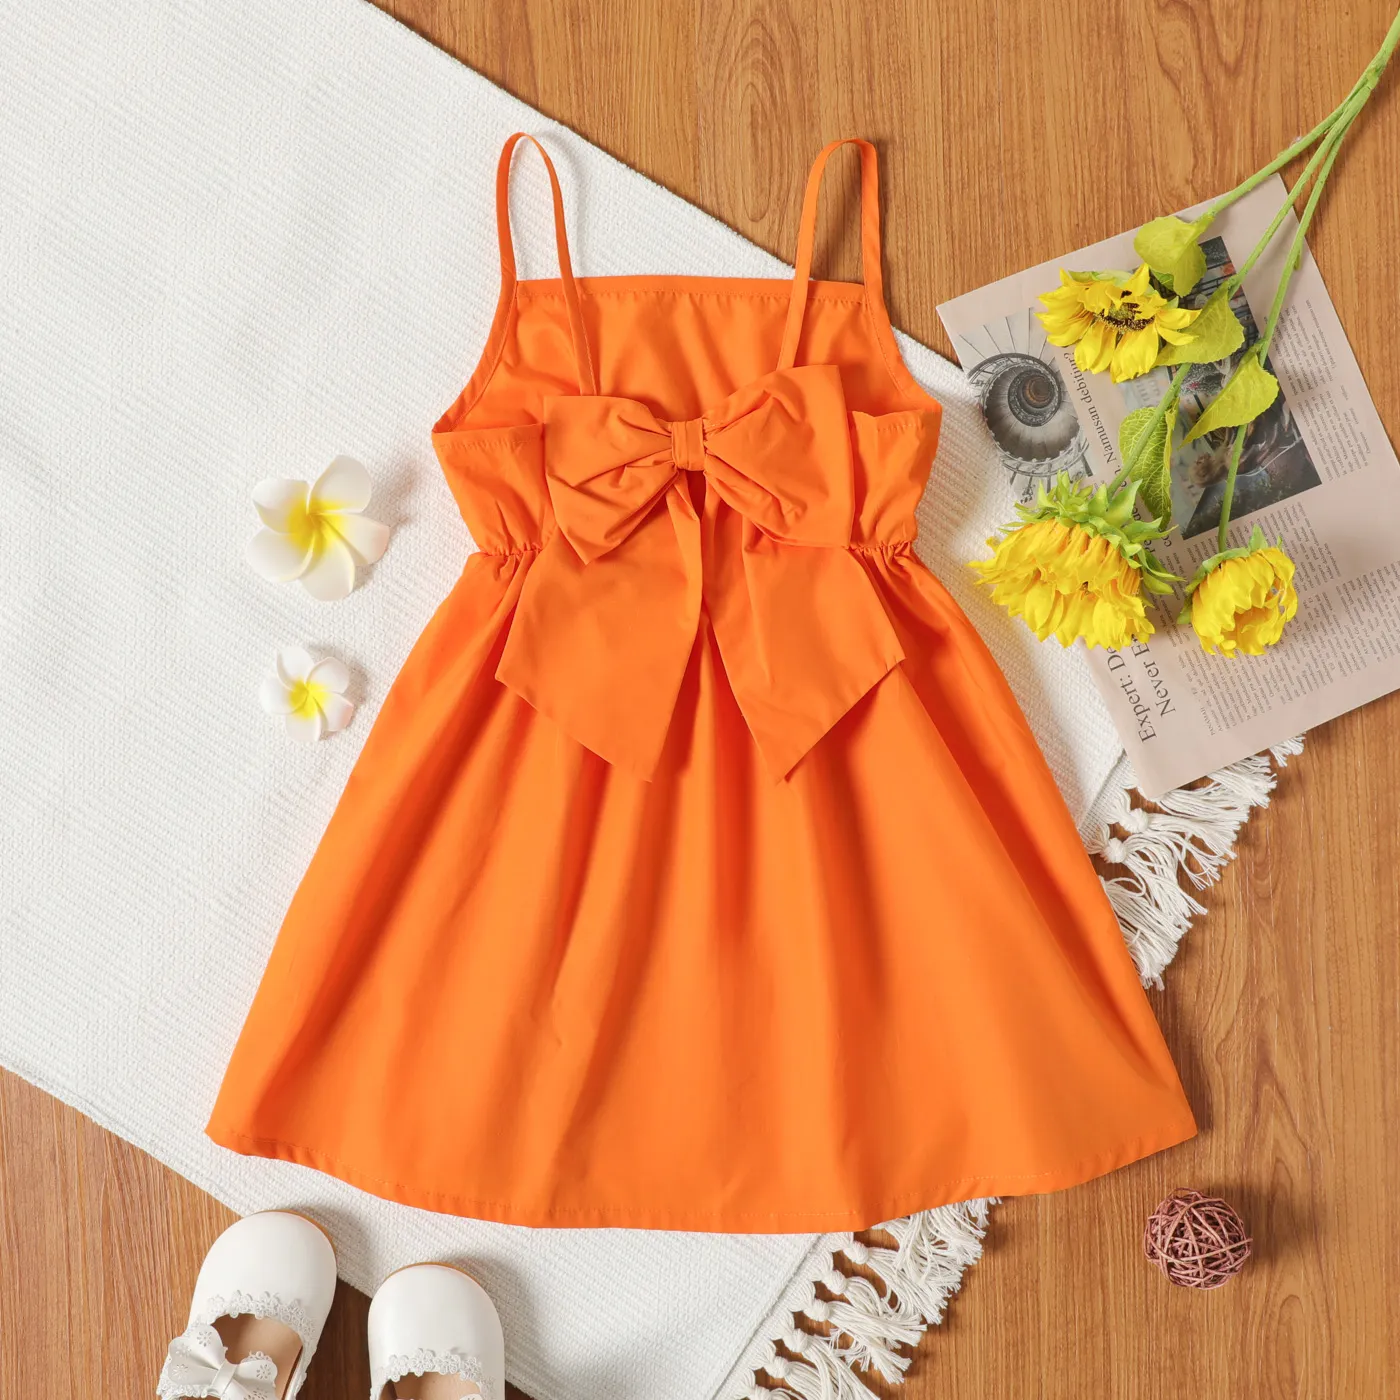 Toddler Girl Bowknot Design Floral Print/Orange Slip Dress